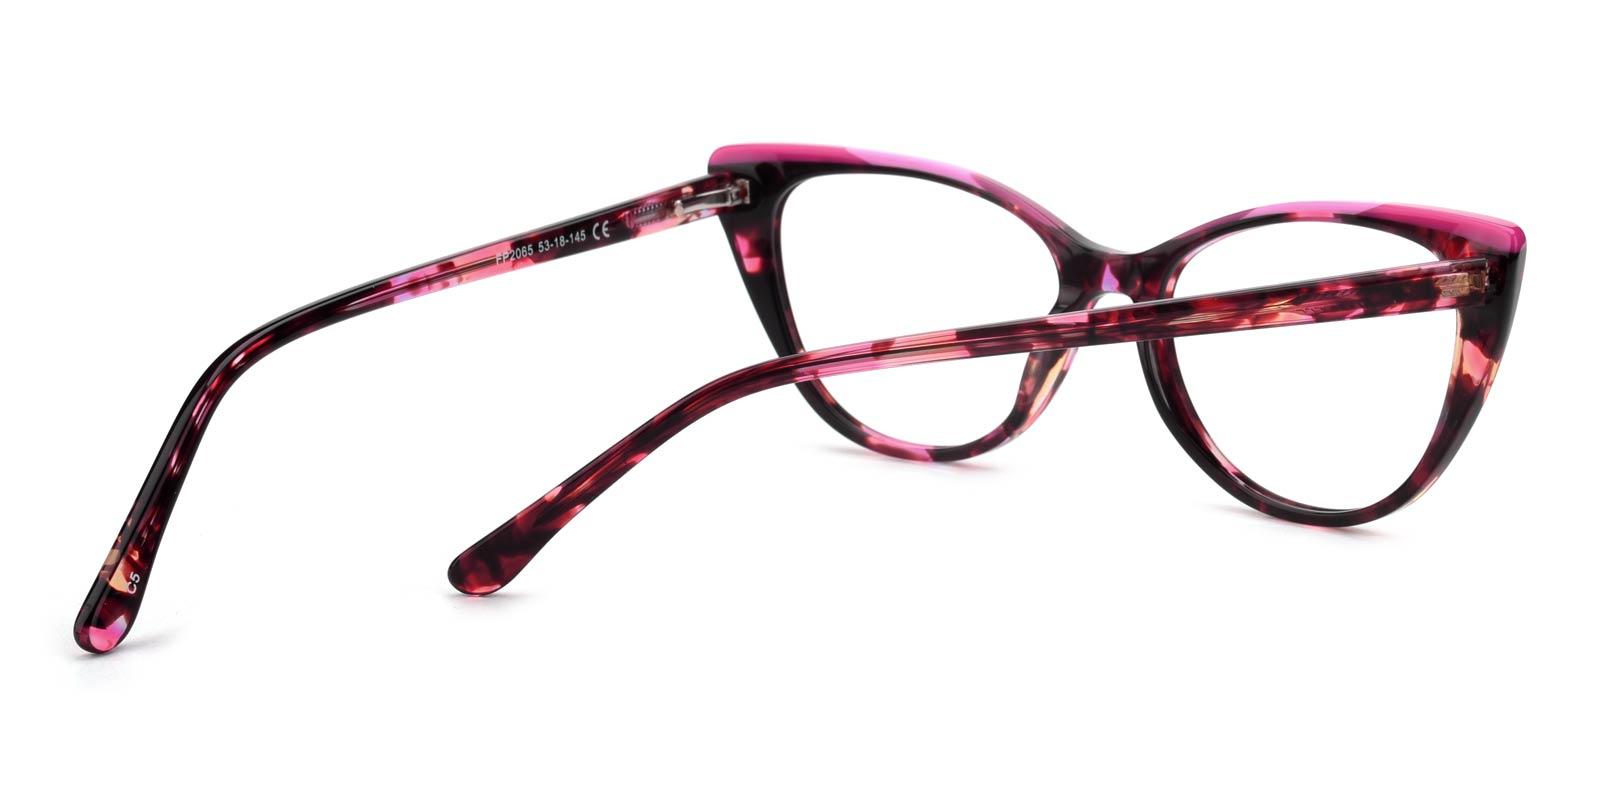 Perla-Purple-Cat-TR-Eyeglasses-detail